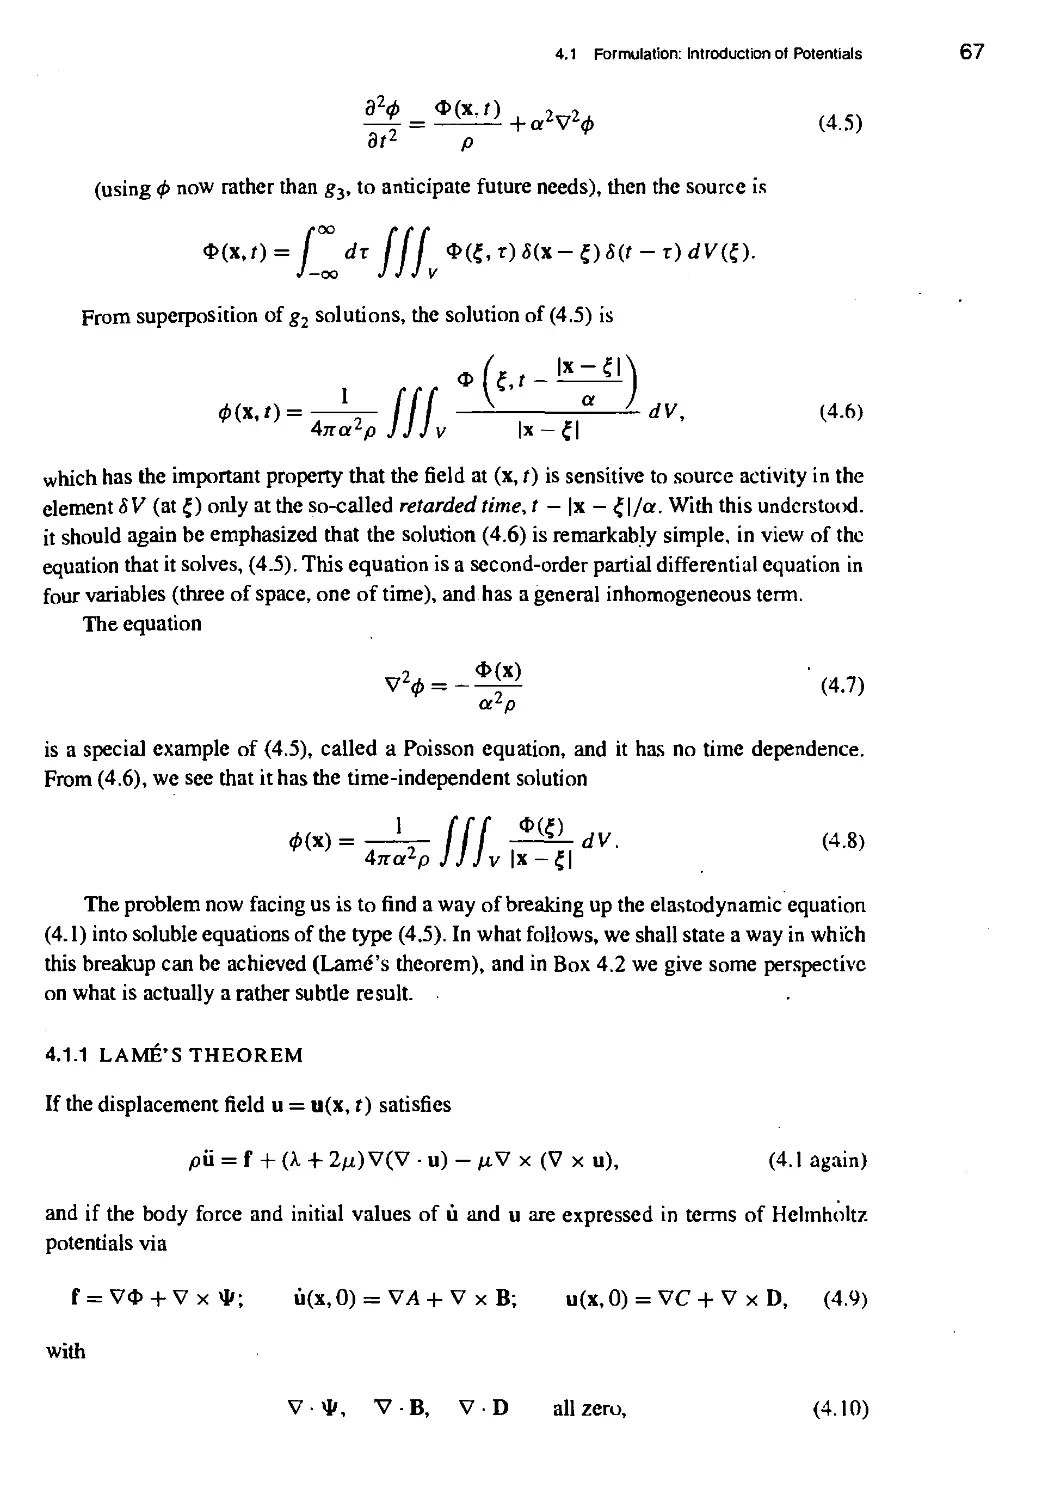 4.1.1 Lame's theorem